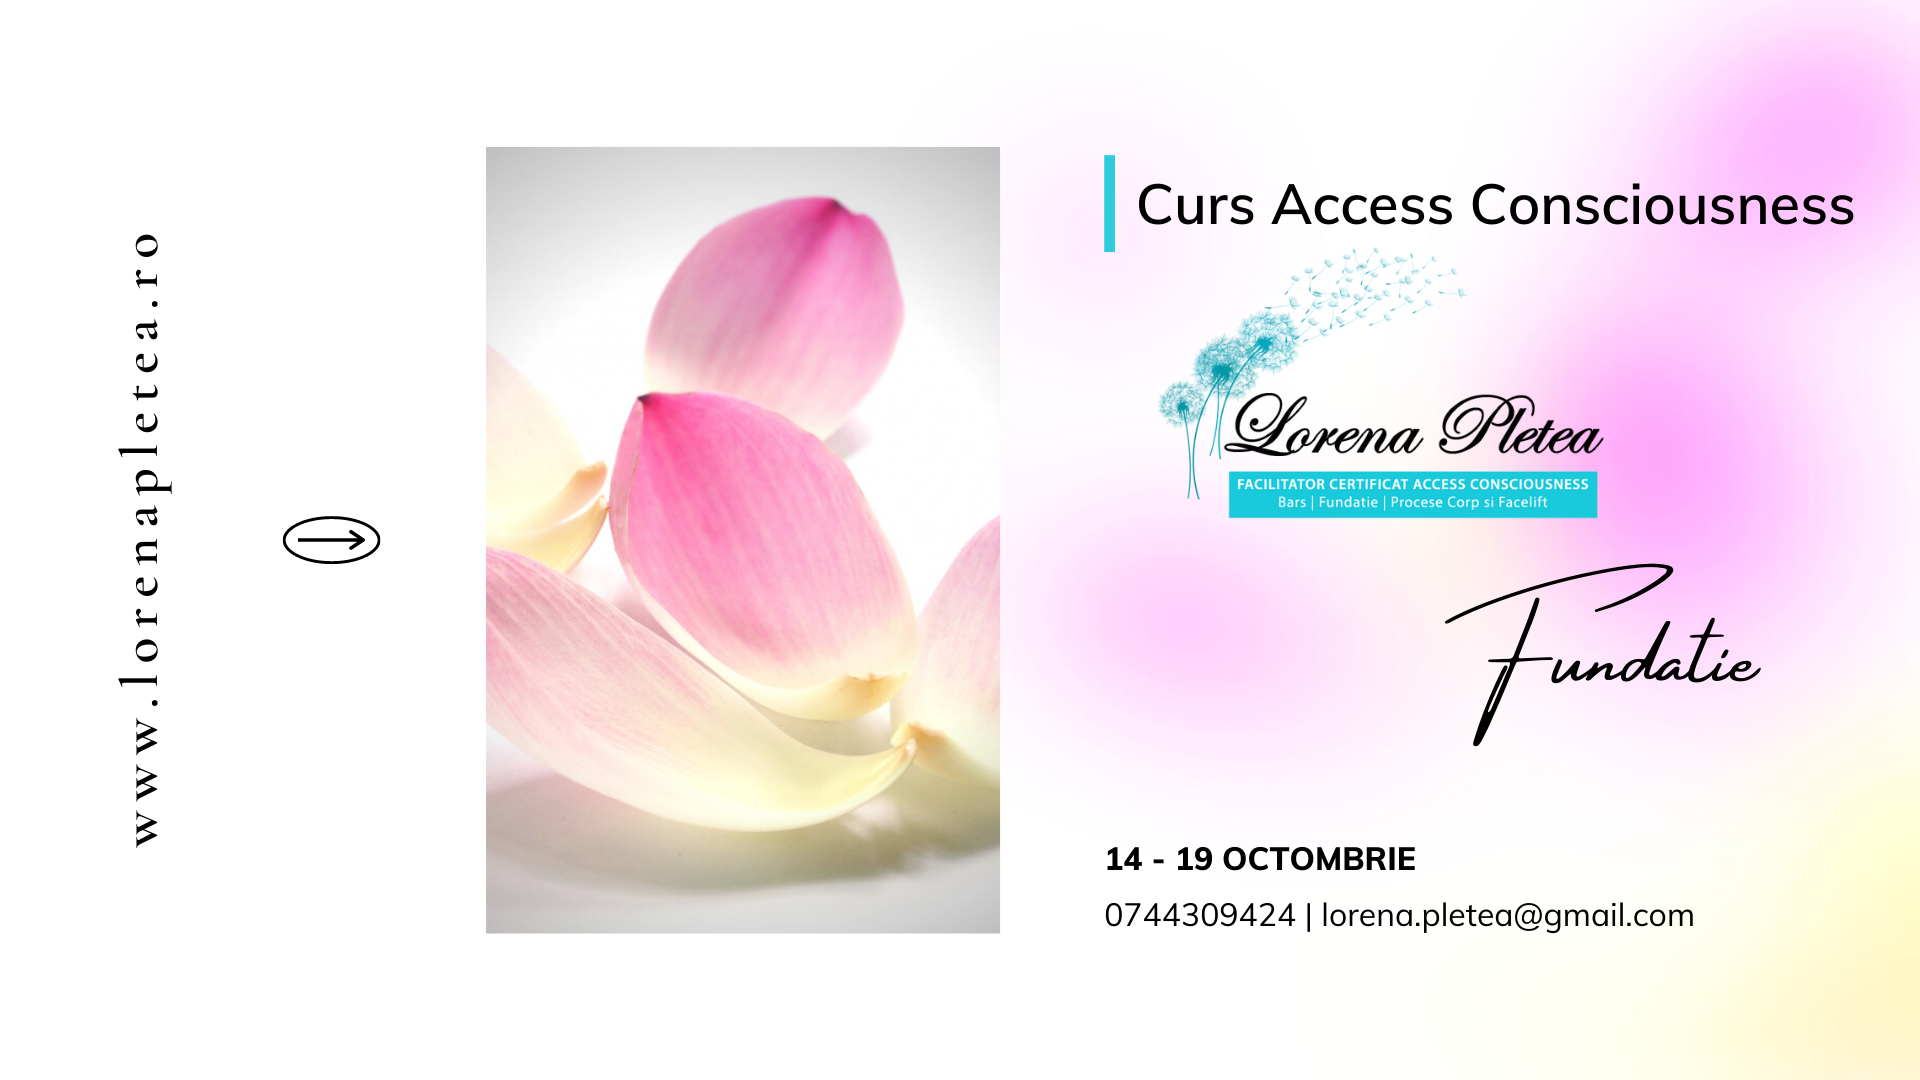 Curs Access Consciousness Fundatia | 14 -19 octombrie, Constanta